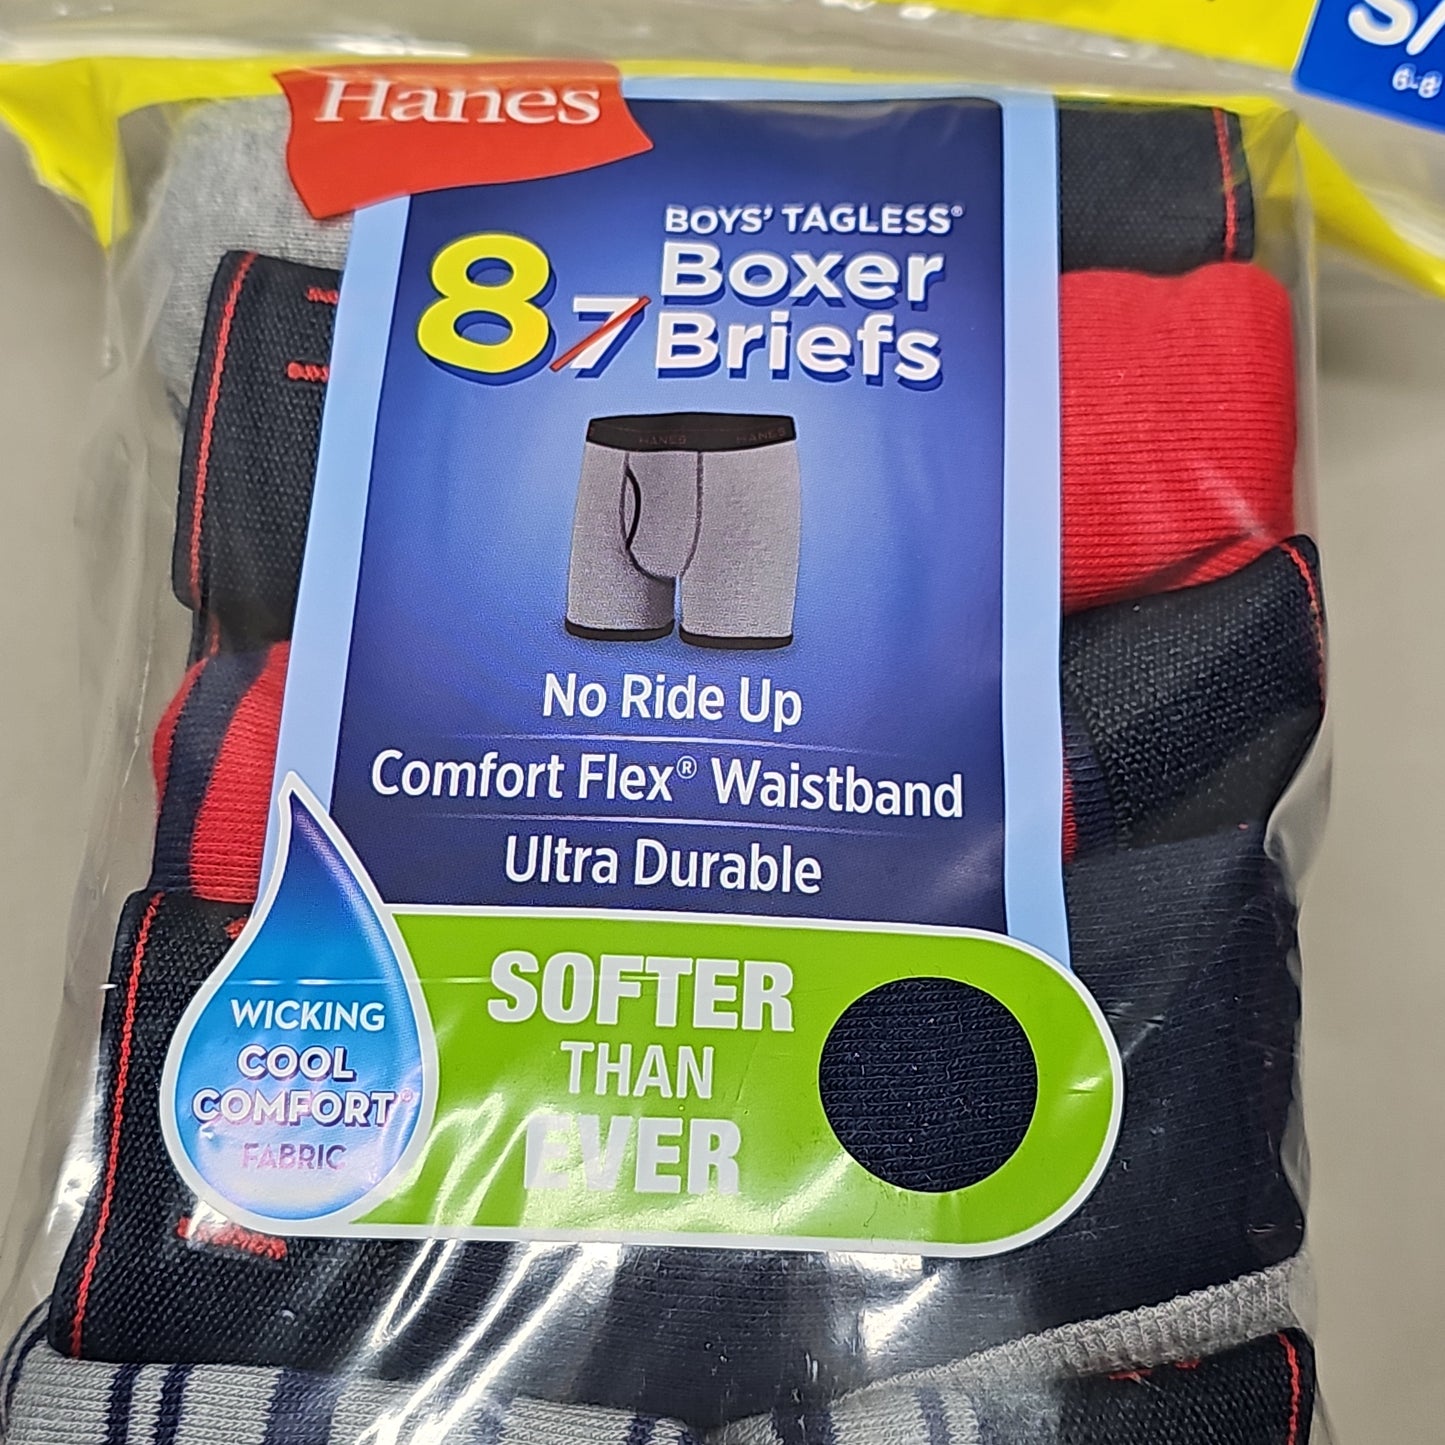 HANES Boxer Briefs 8-Pack Boy's Tagless Size S 6/8 B74SR8 (New)